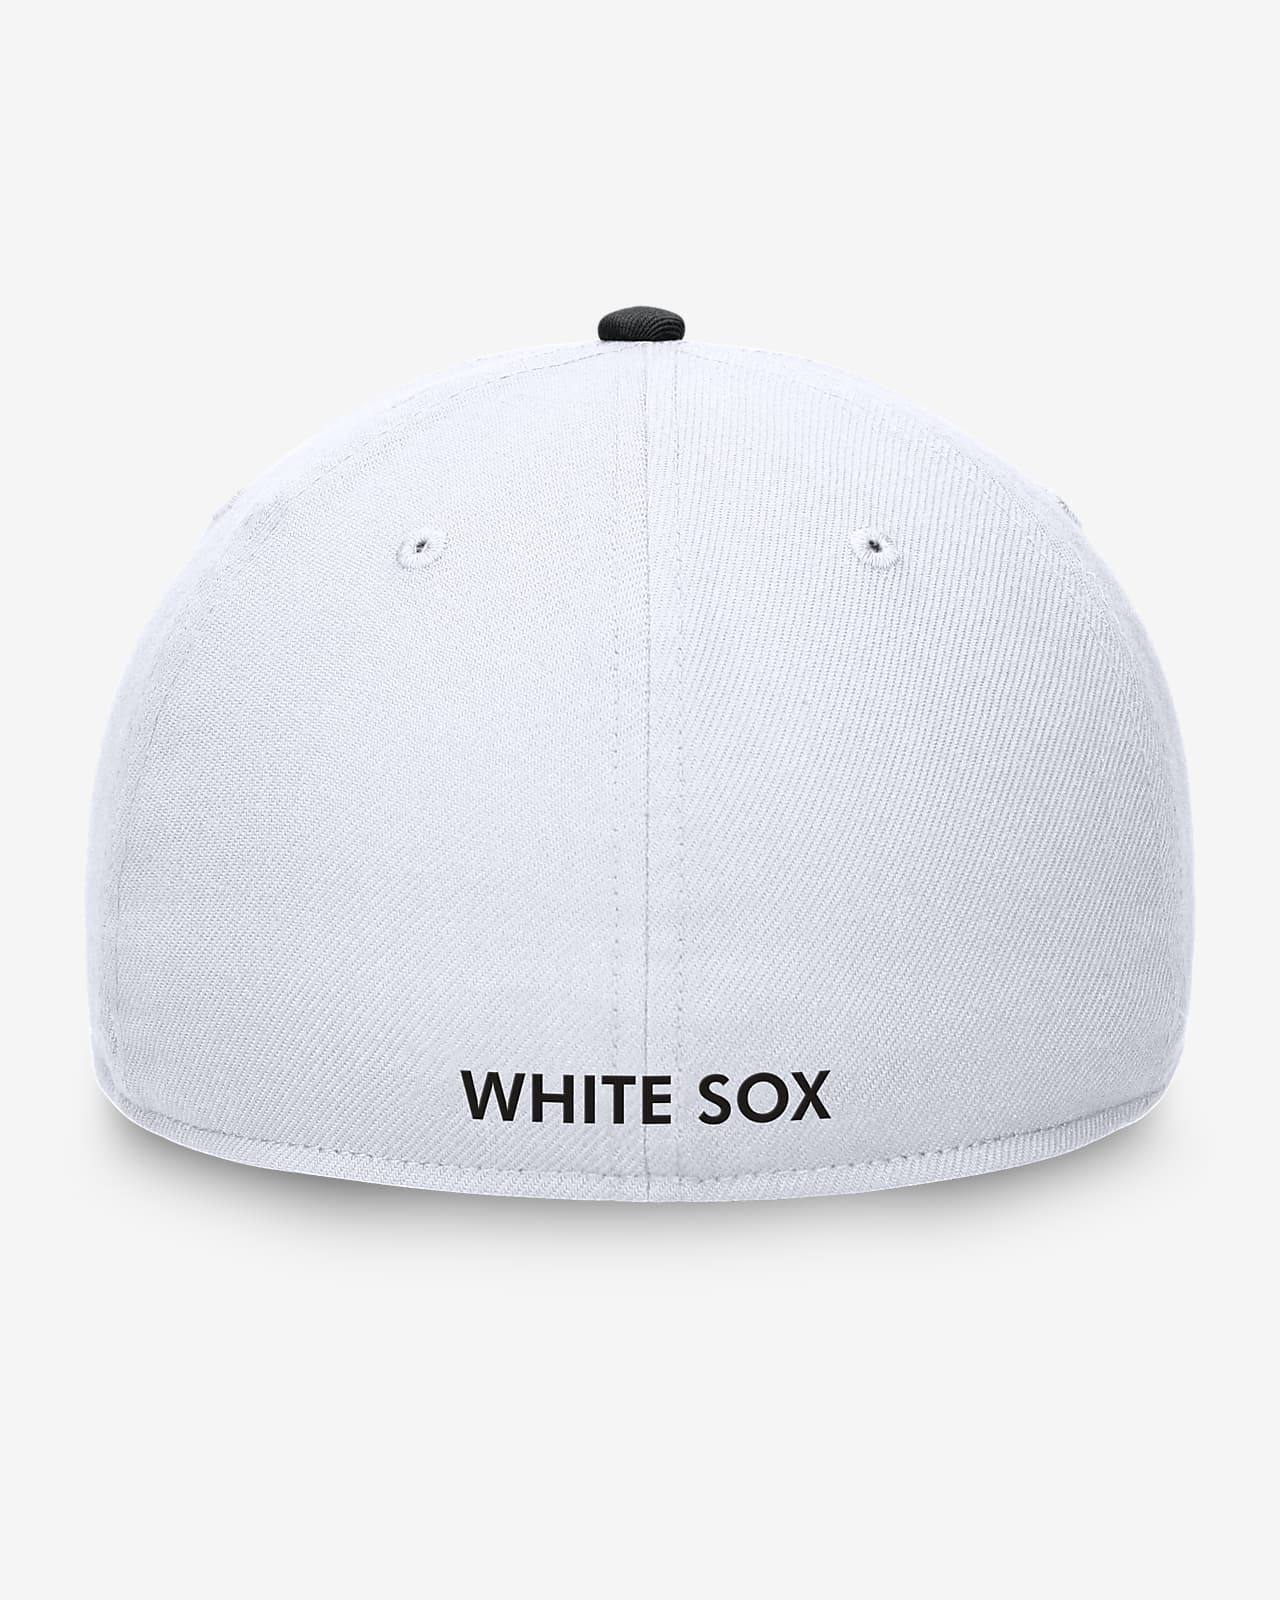 Chicago White Sox Classic99 Swoosh Men's Nike Dri-FIT MLB Hat.